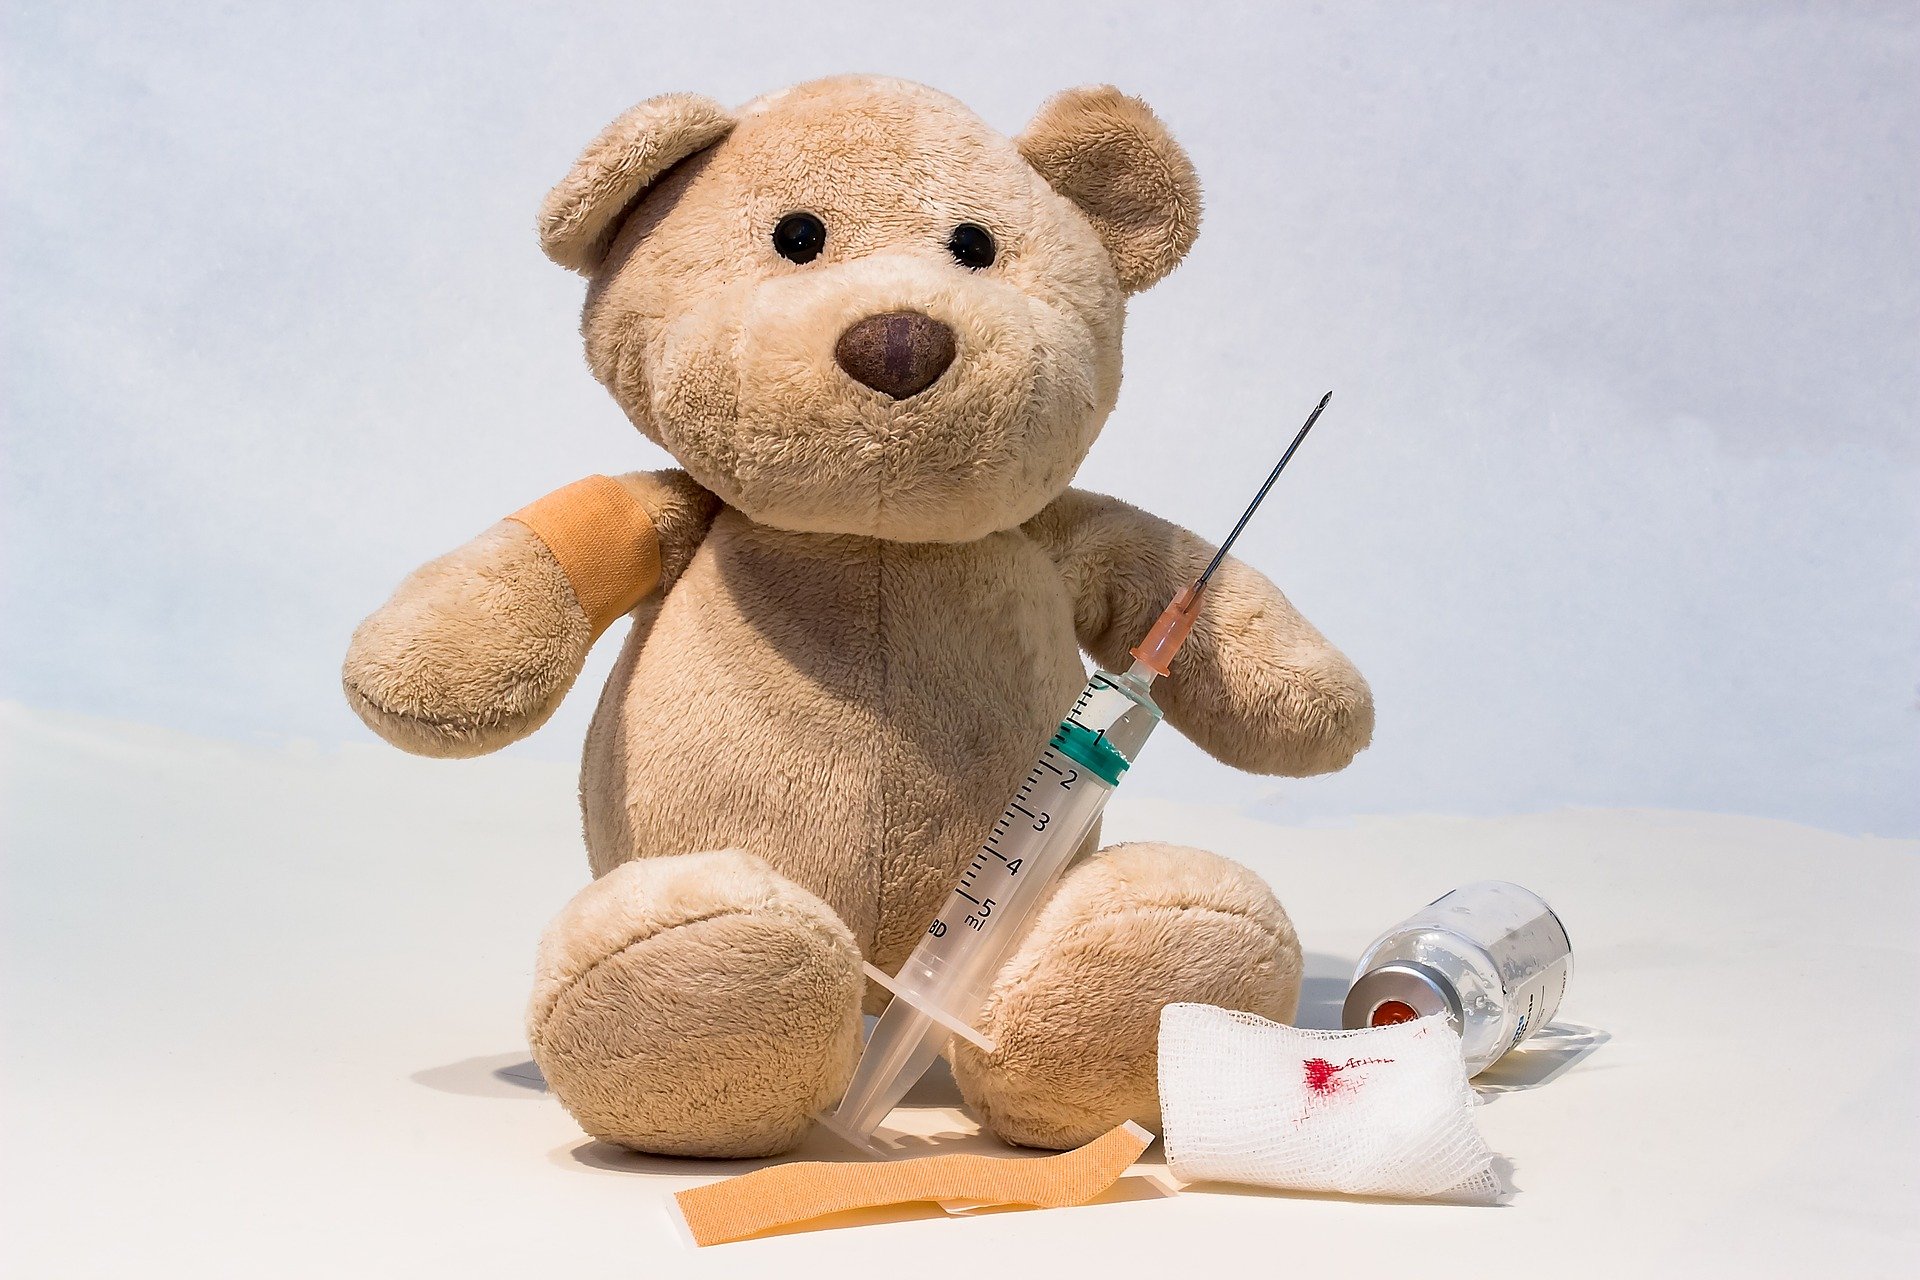 Impfung Teddy (myriams fotos - pixabay) (c) Myriams Fotos (www.pixabay.de)